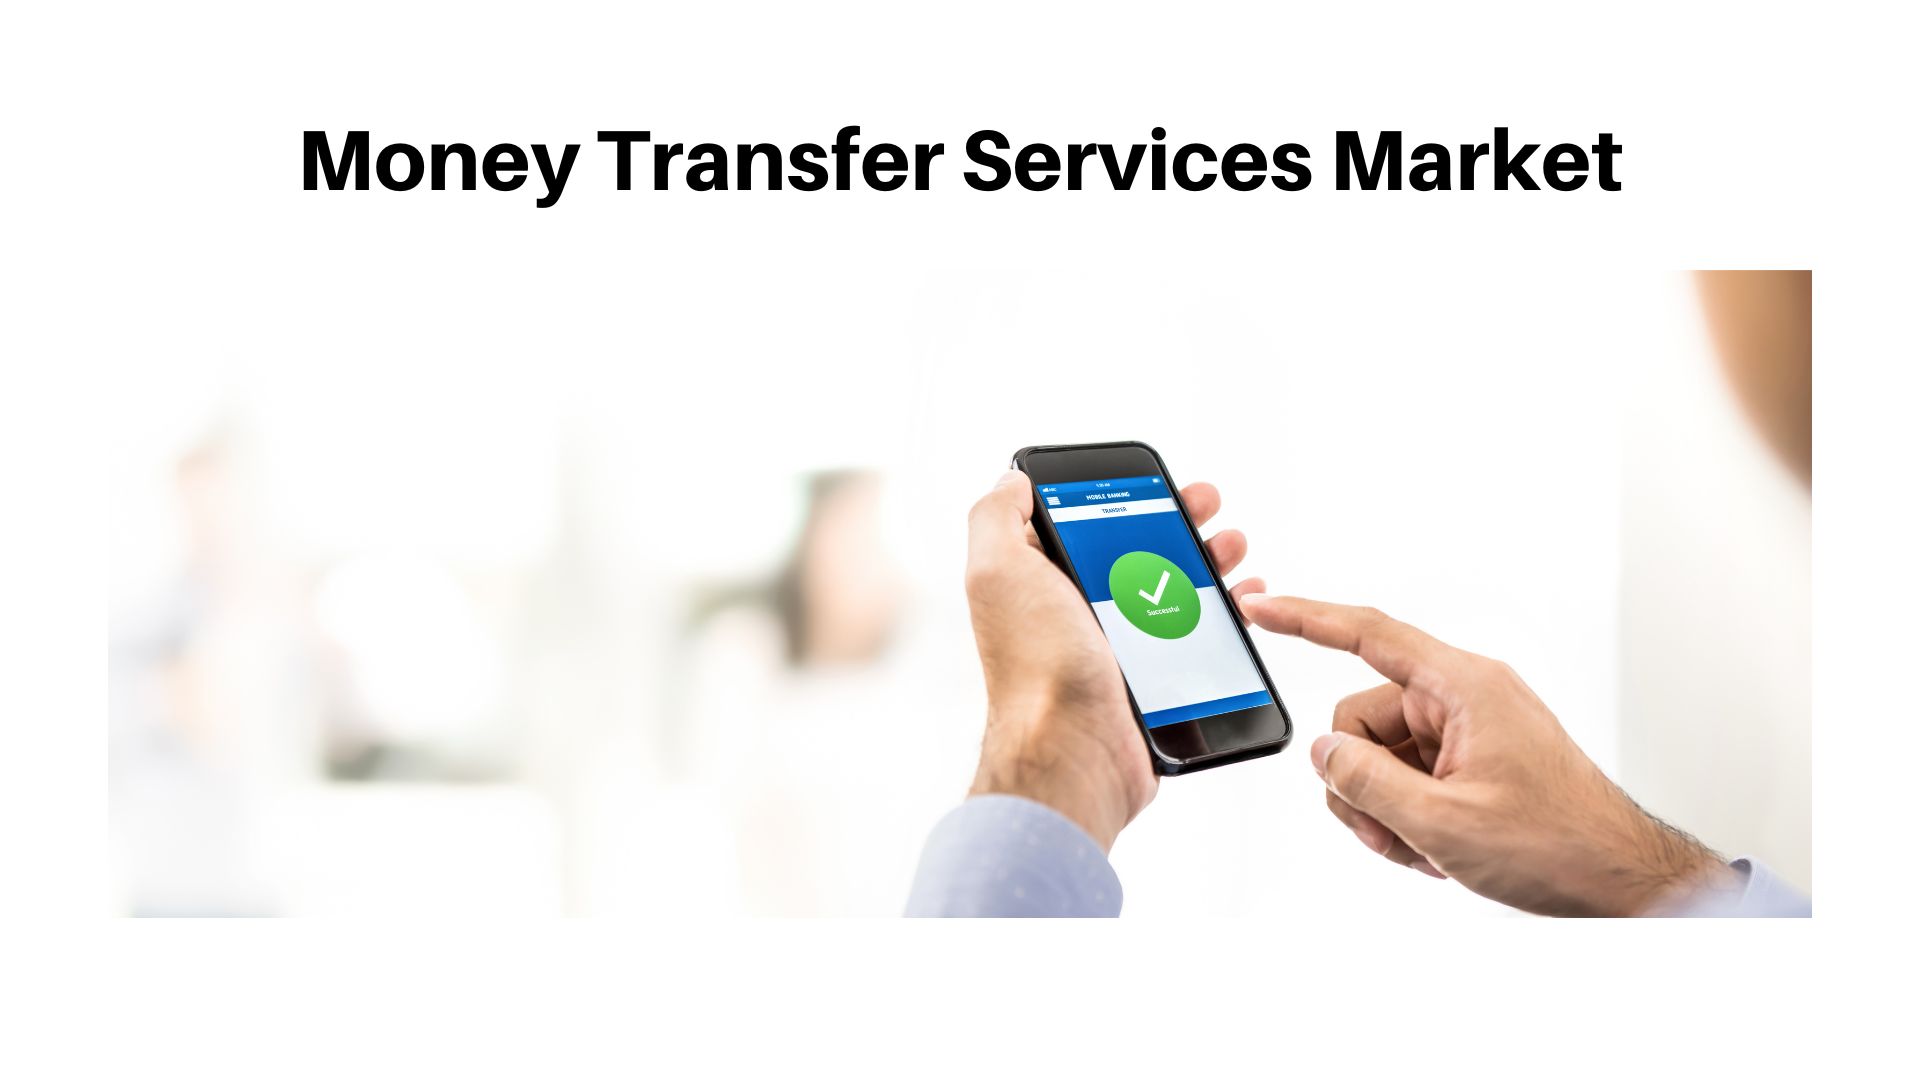 Money Transfer Services Market To Register USD 111.8 Bn Revenue By 2033